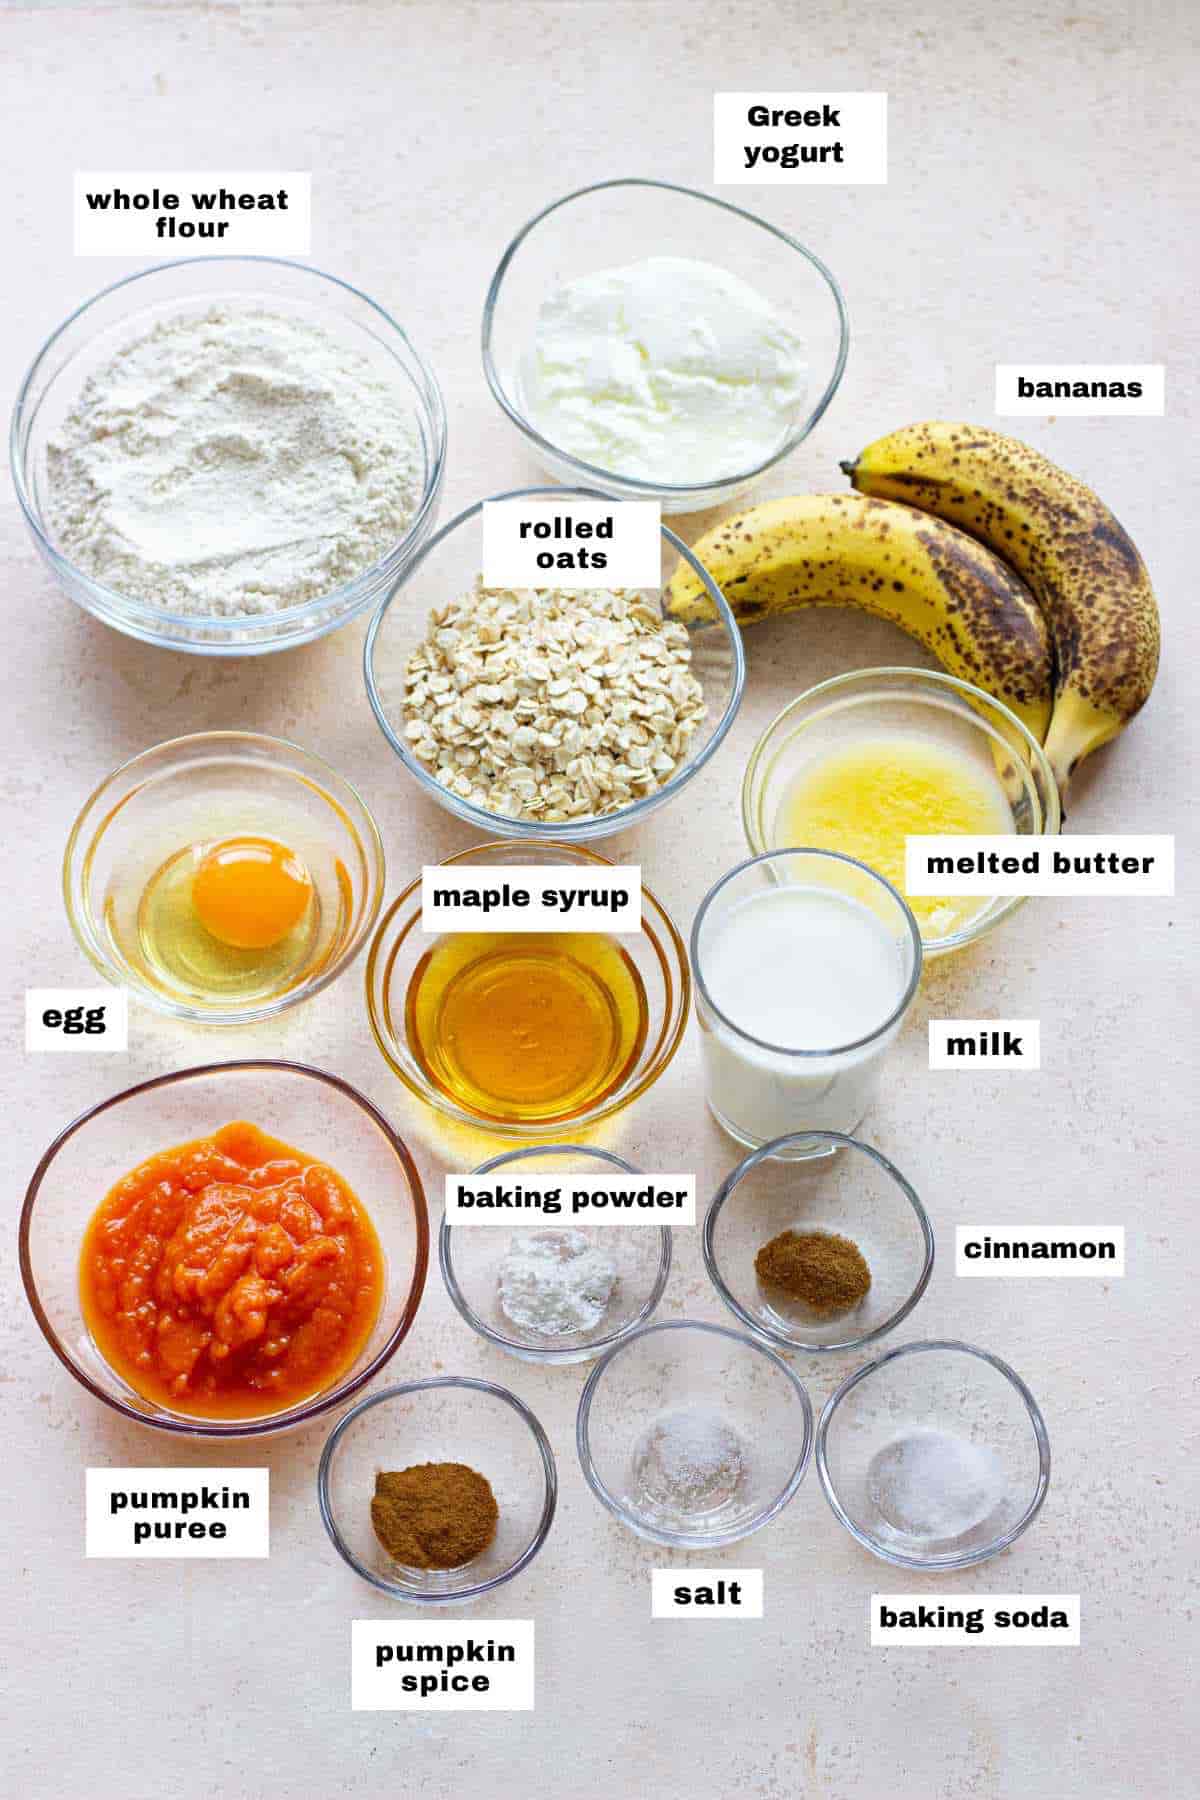 The ingredients for a pumpkin banana oat bread recipe.